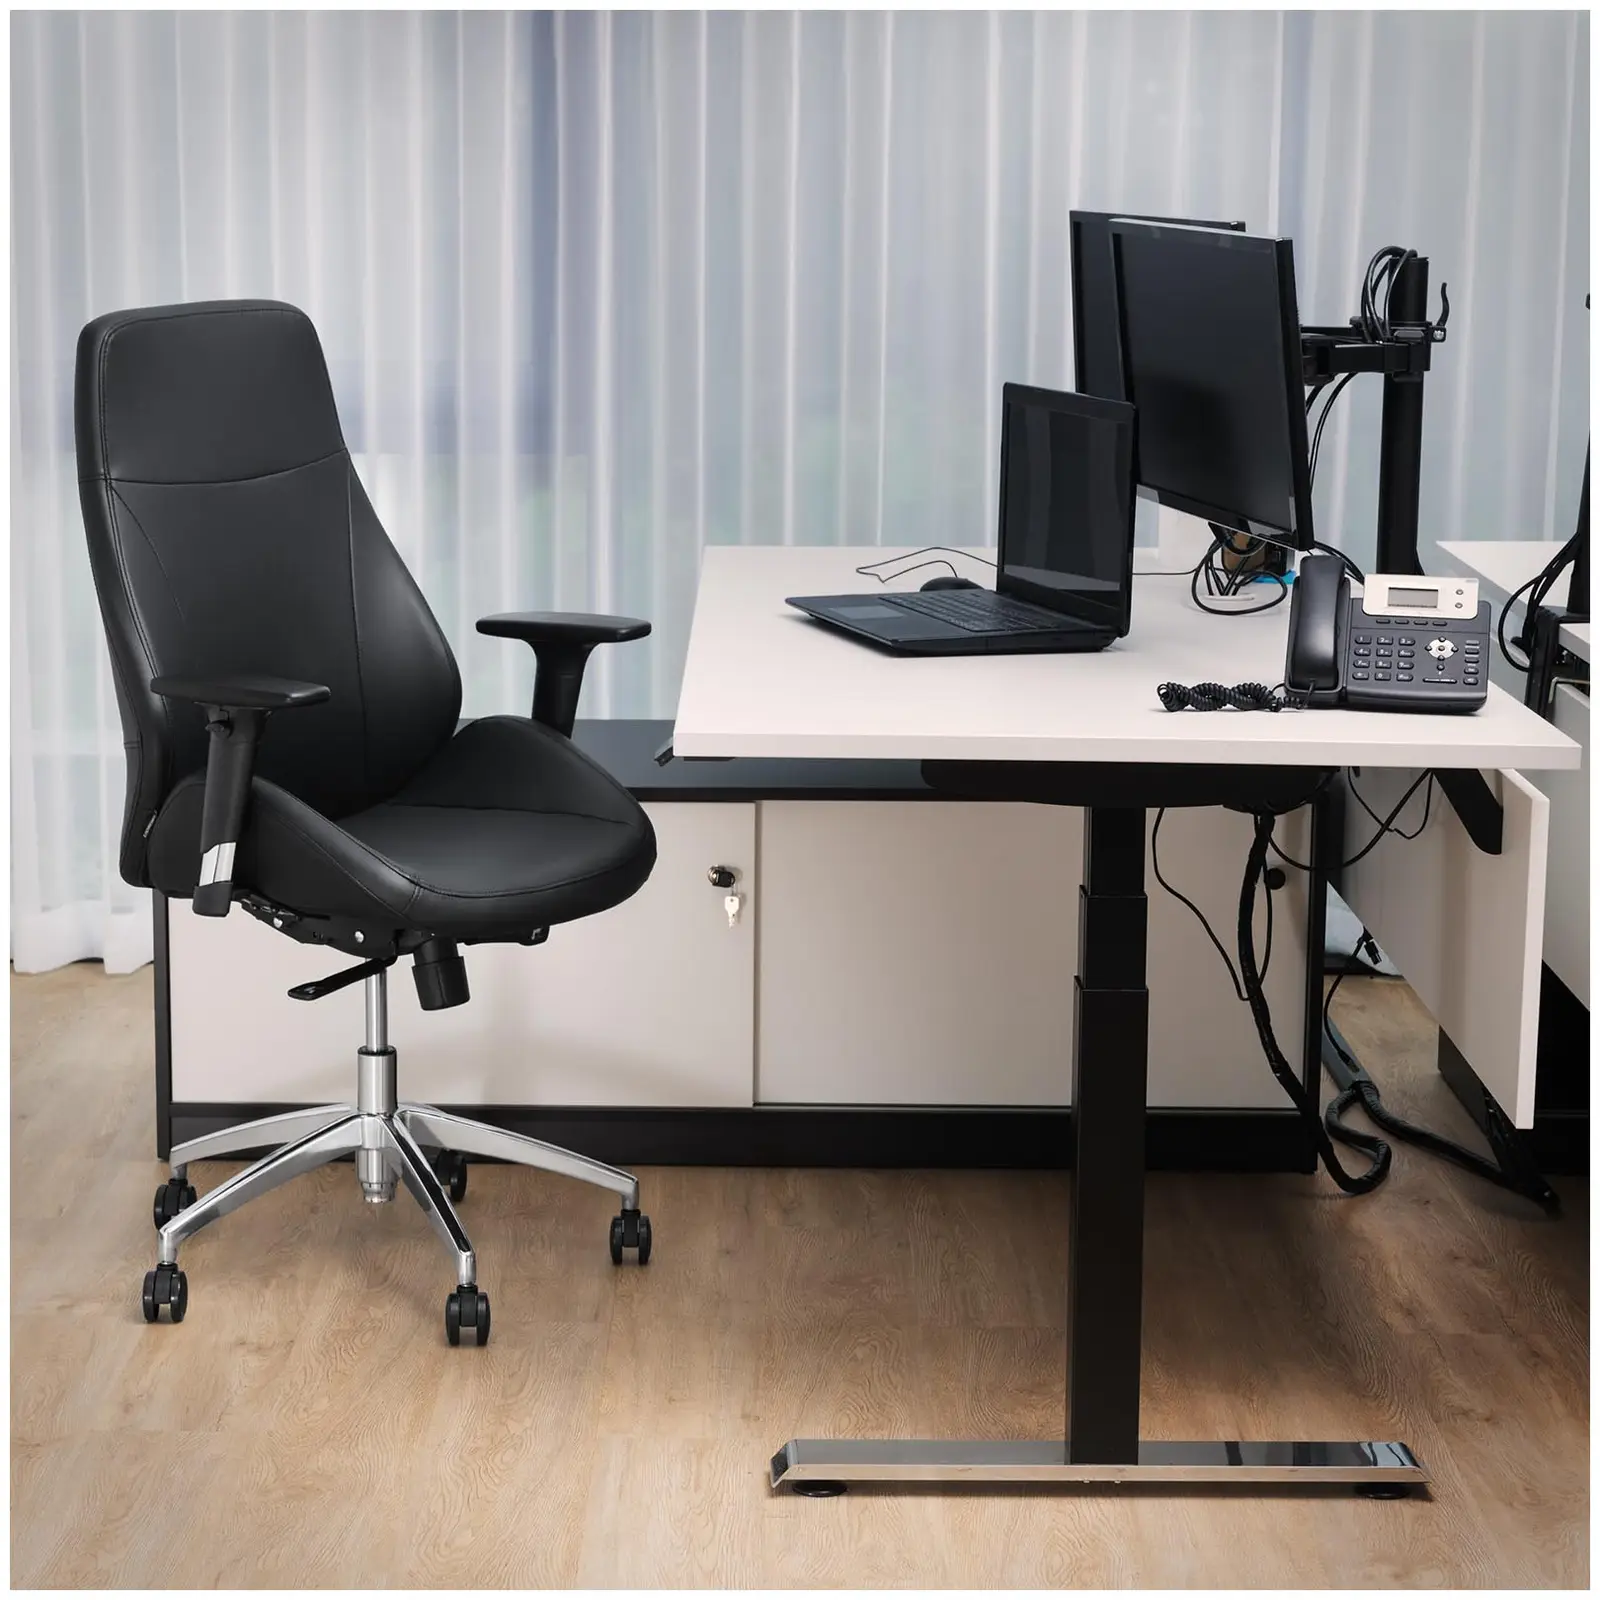 Office Chair - executive chair - imitation leather - chrome - 150 kg